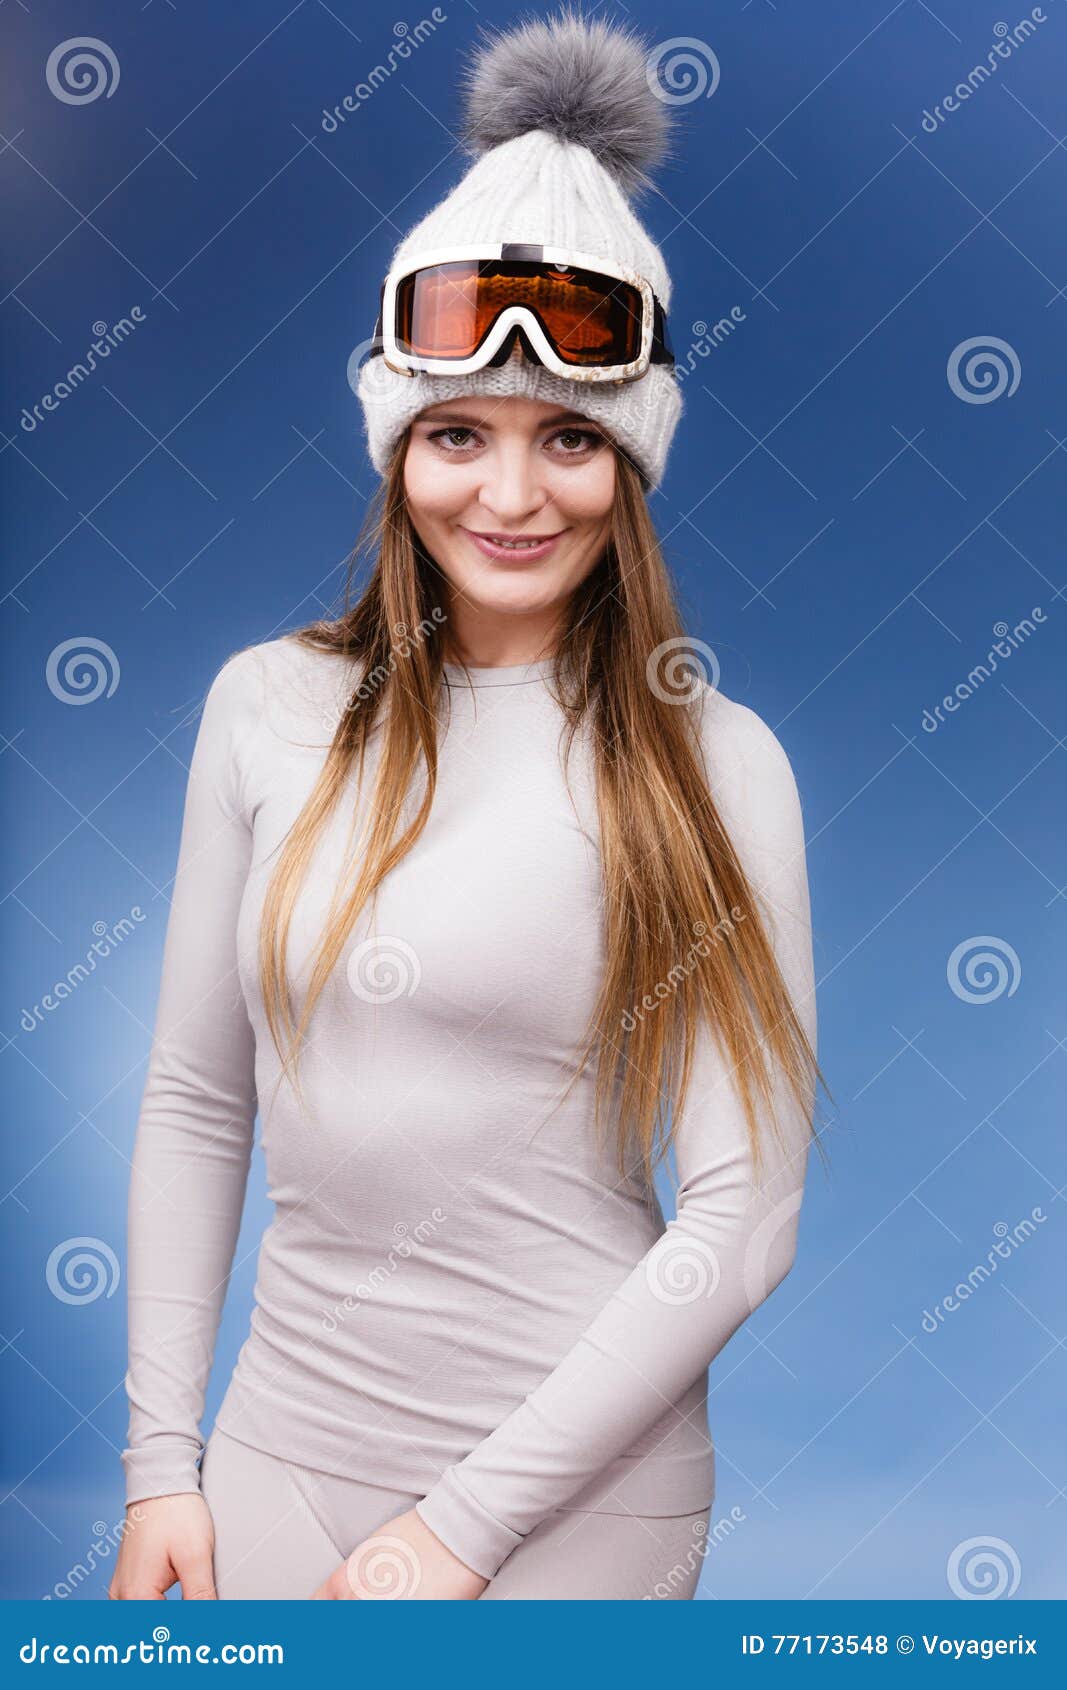 sous vêtements ski femme